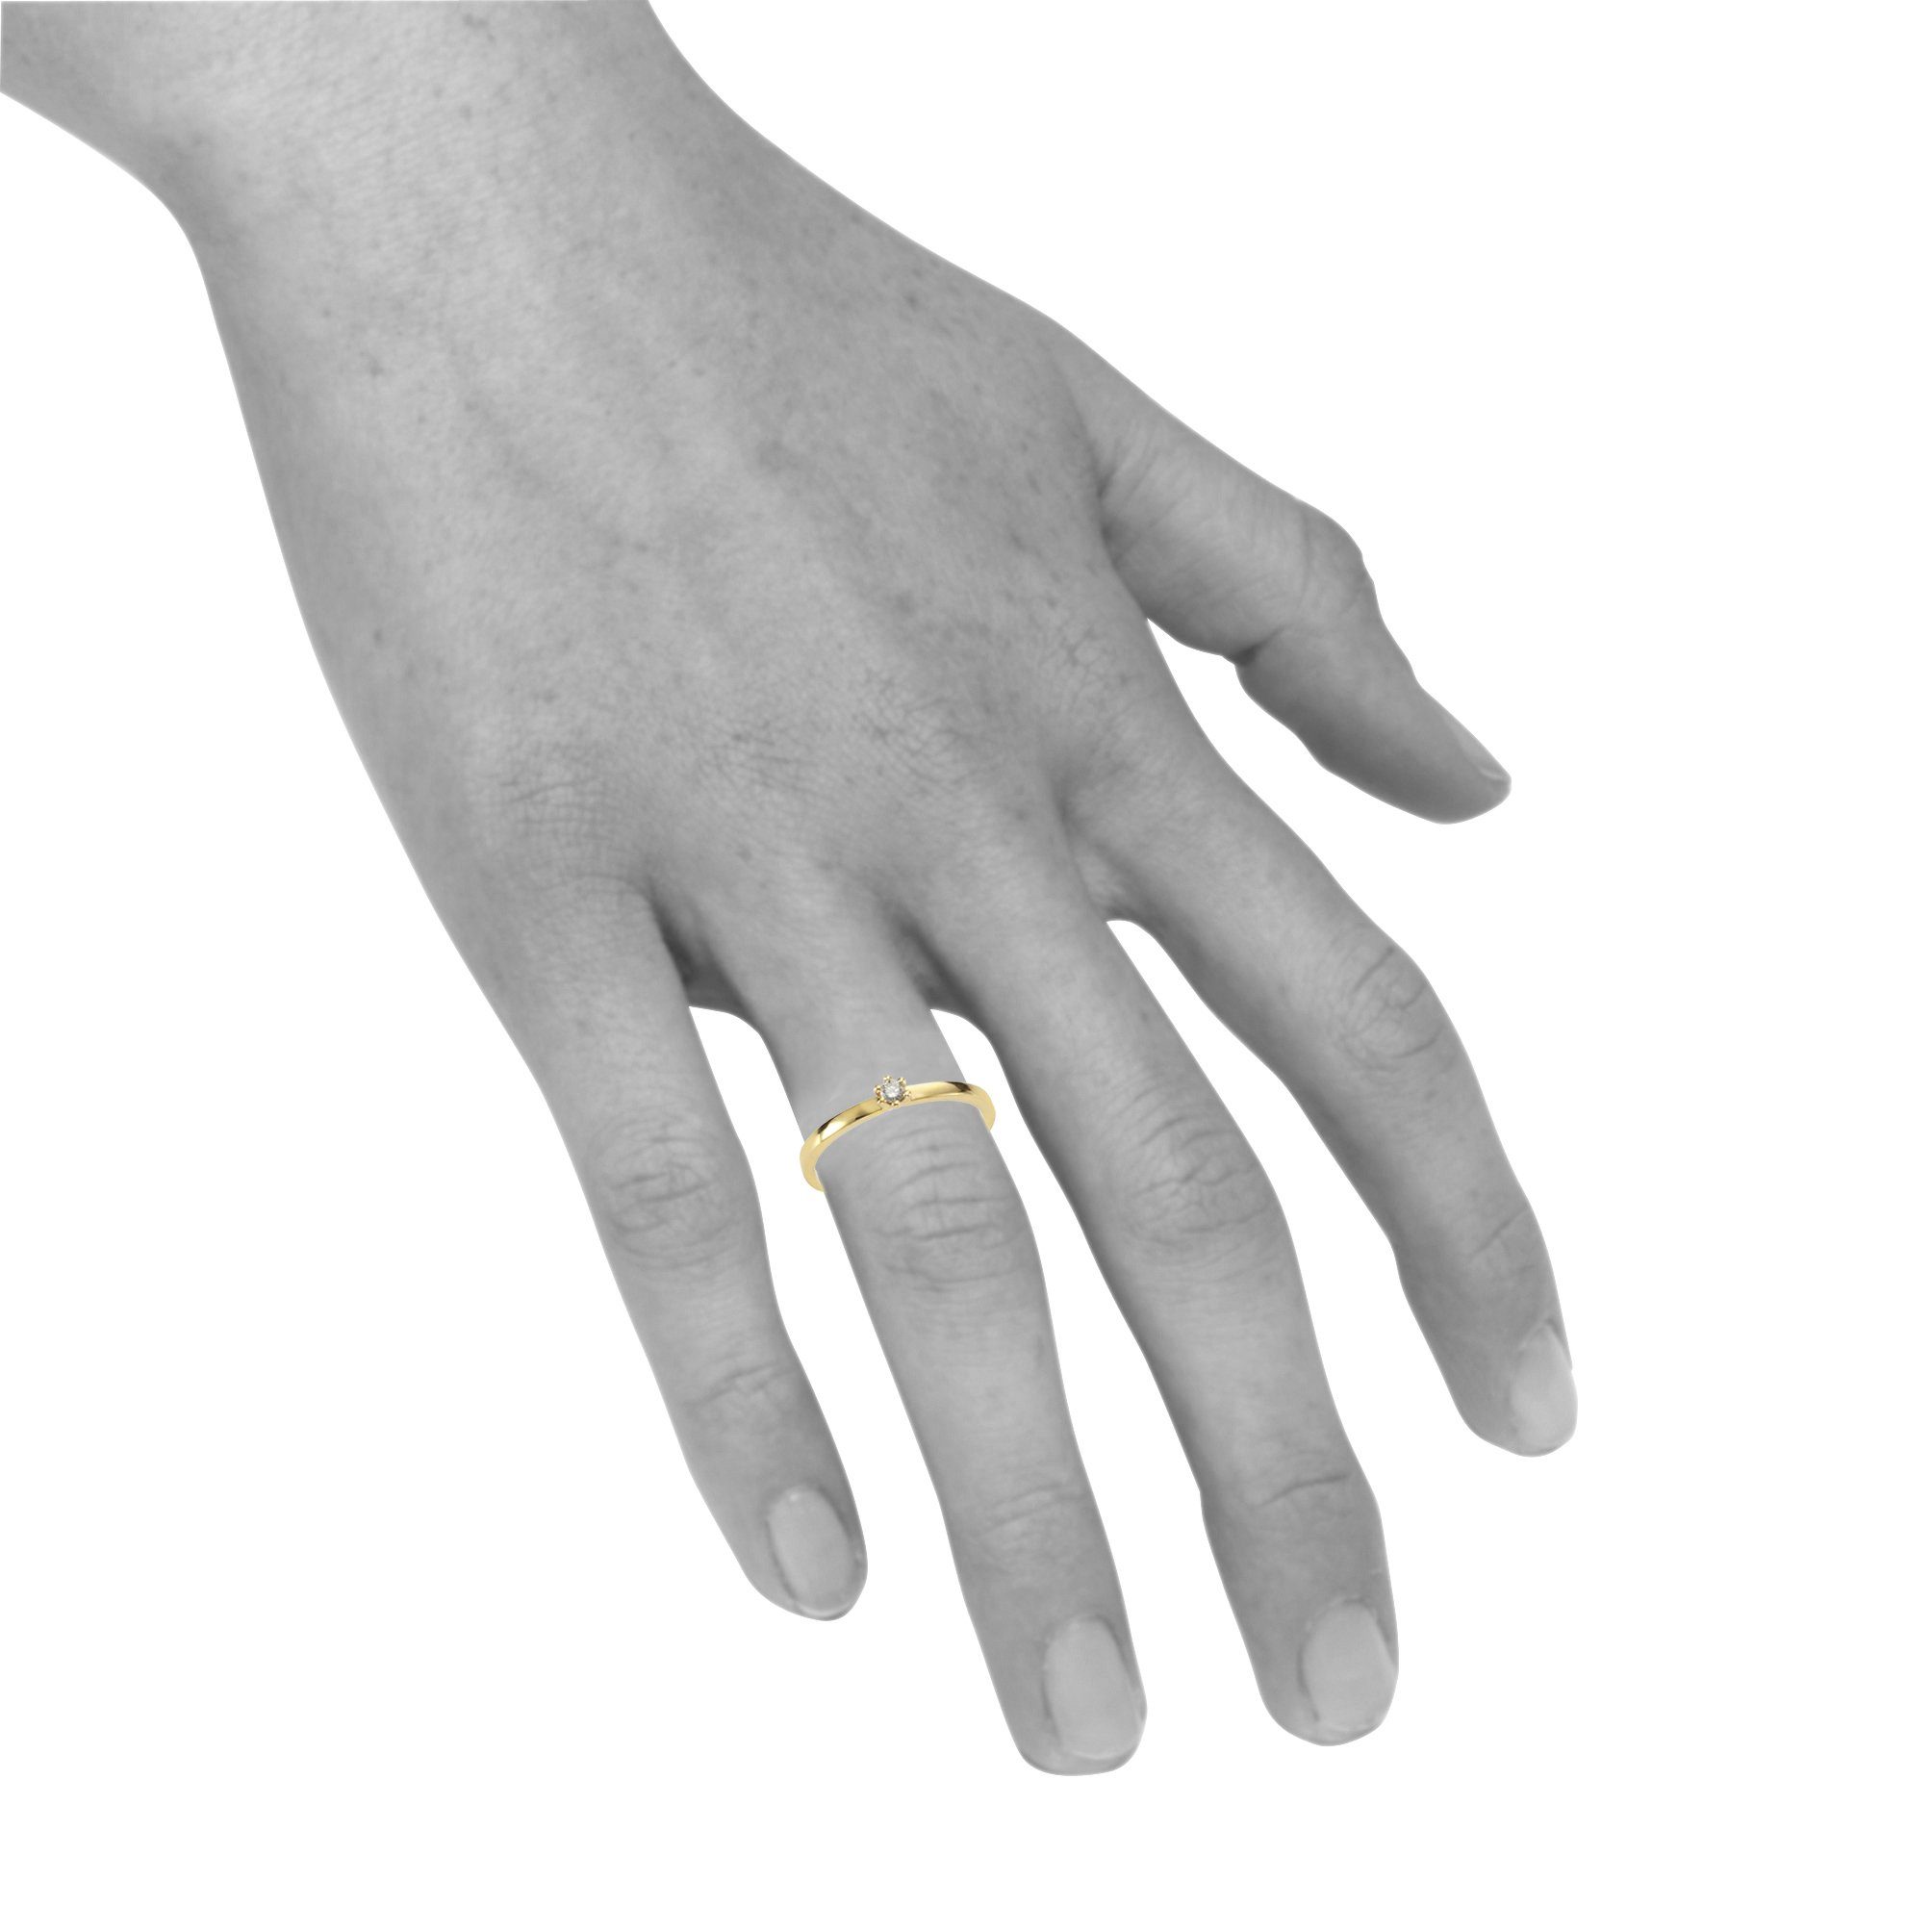 Orolino Brillant Gold 0,05ct. 585 Fingerring